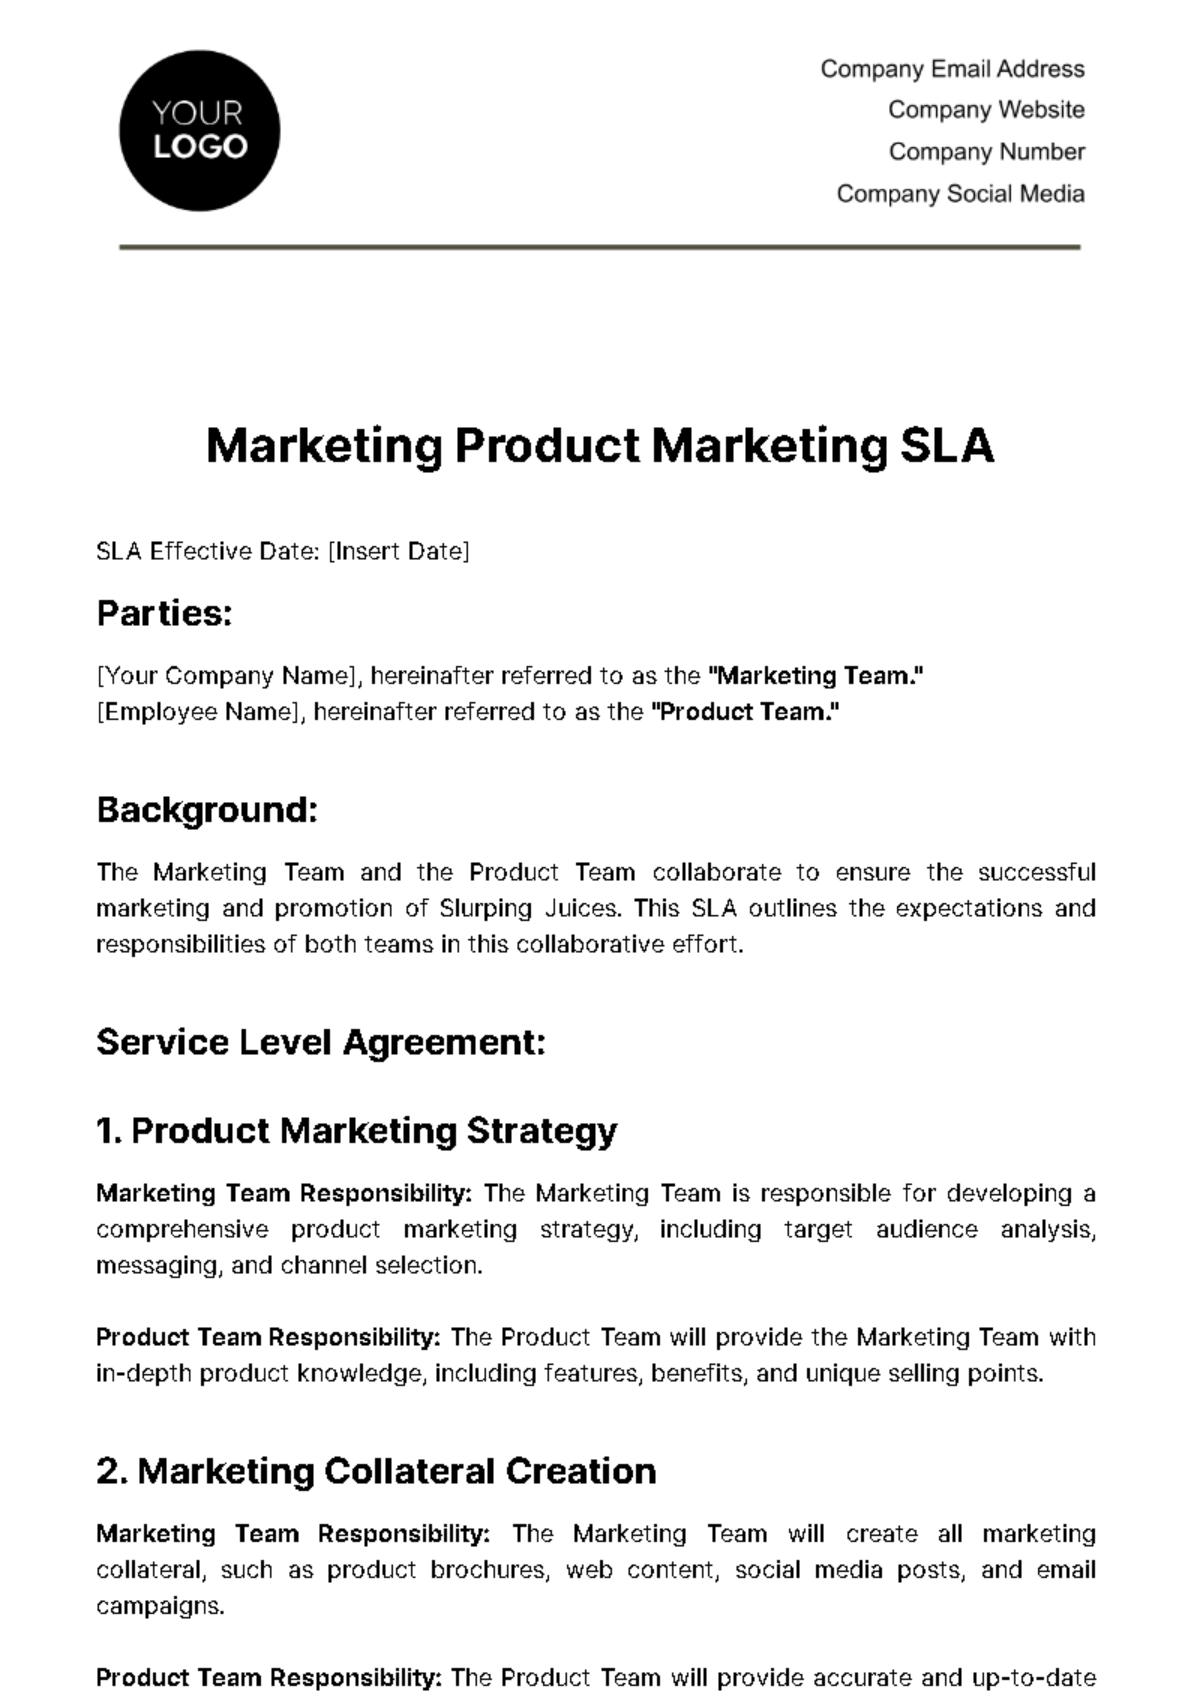 Free Marketing Product Marketing SLA Template